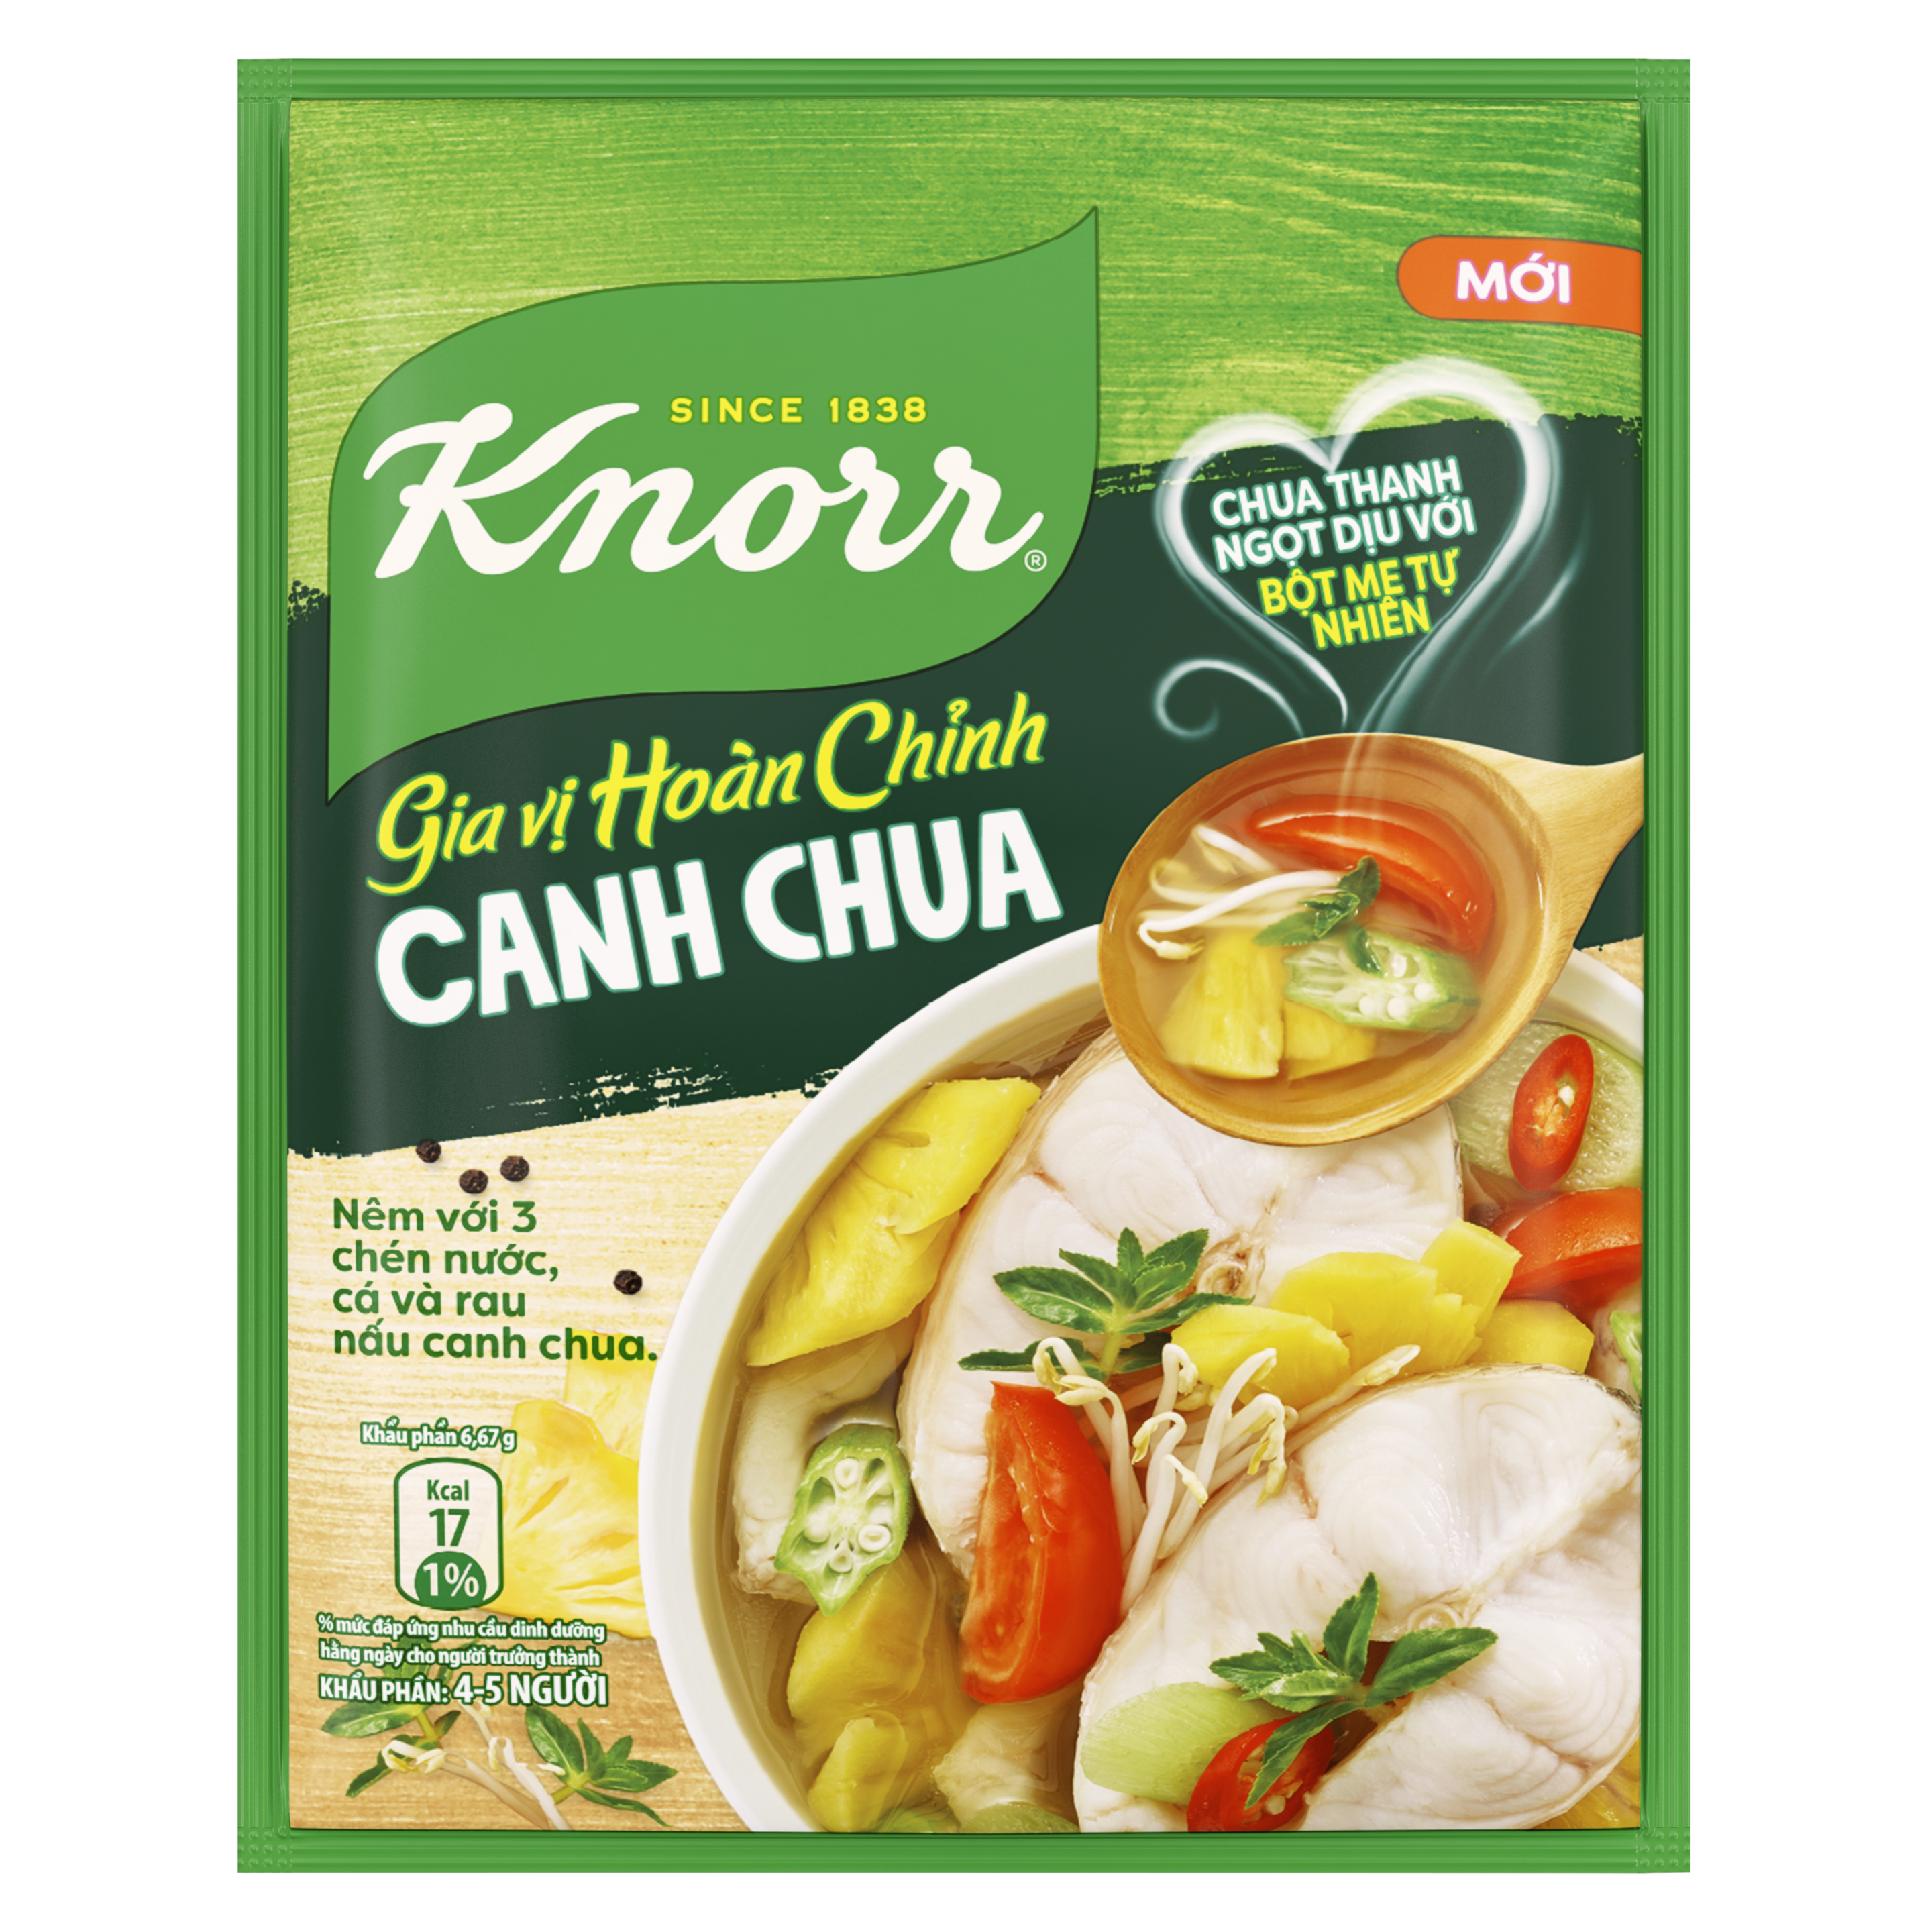 Gia vi hoan chinh Knorr canh chua